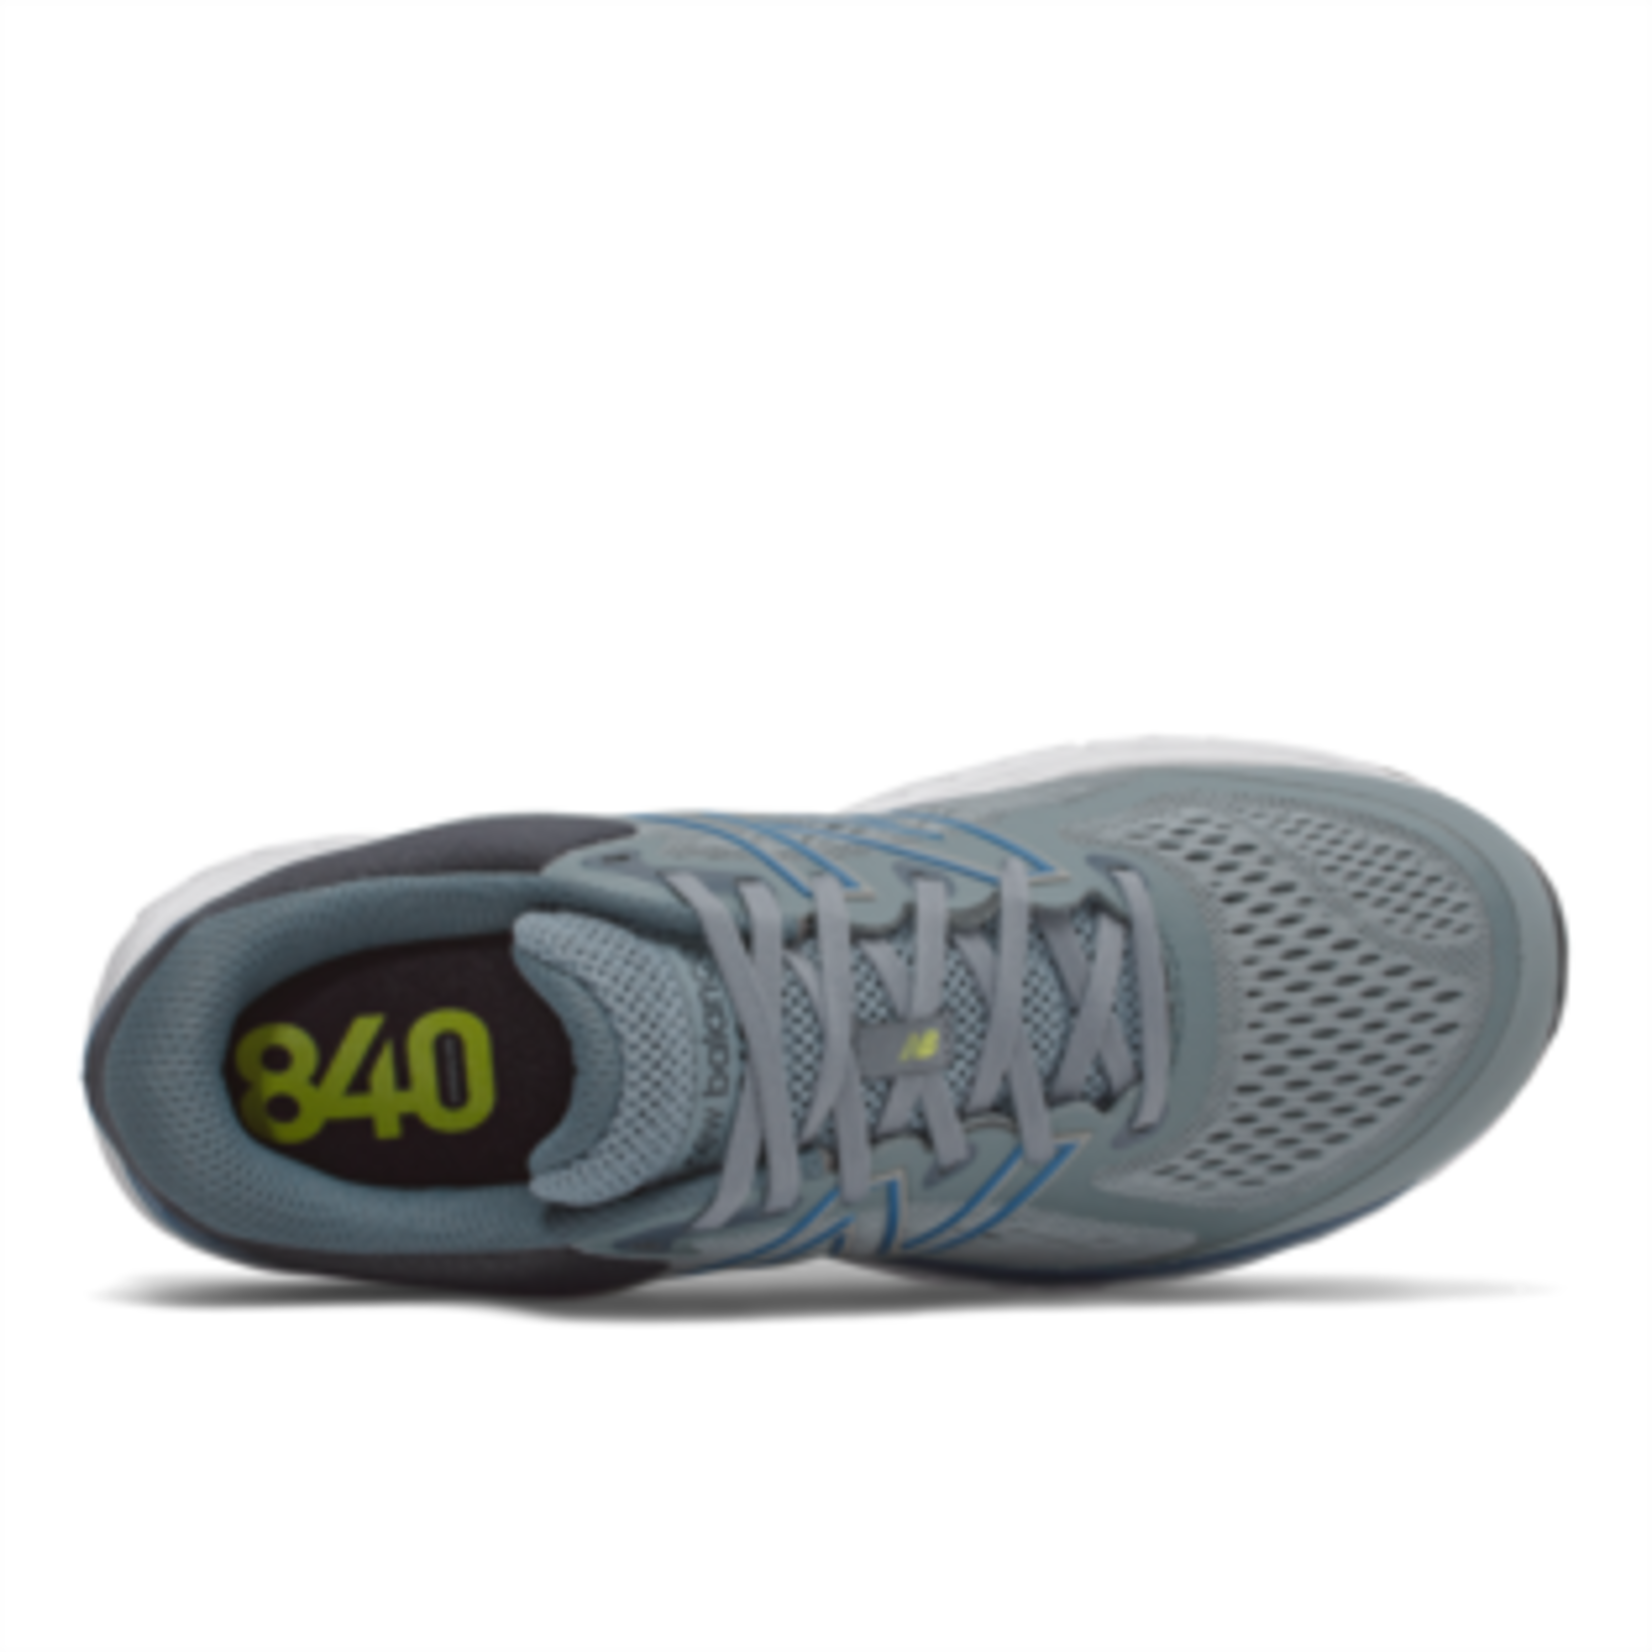 New Balance New Balance Running Shoes, 840 v5, Mens